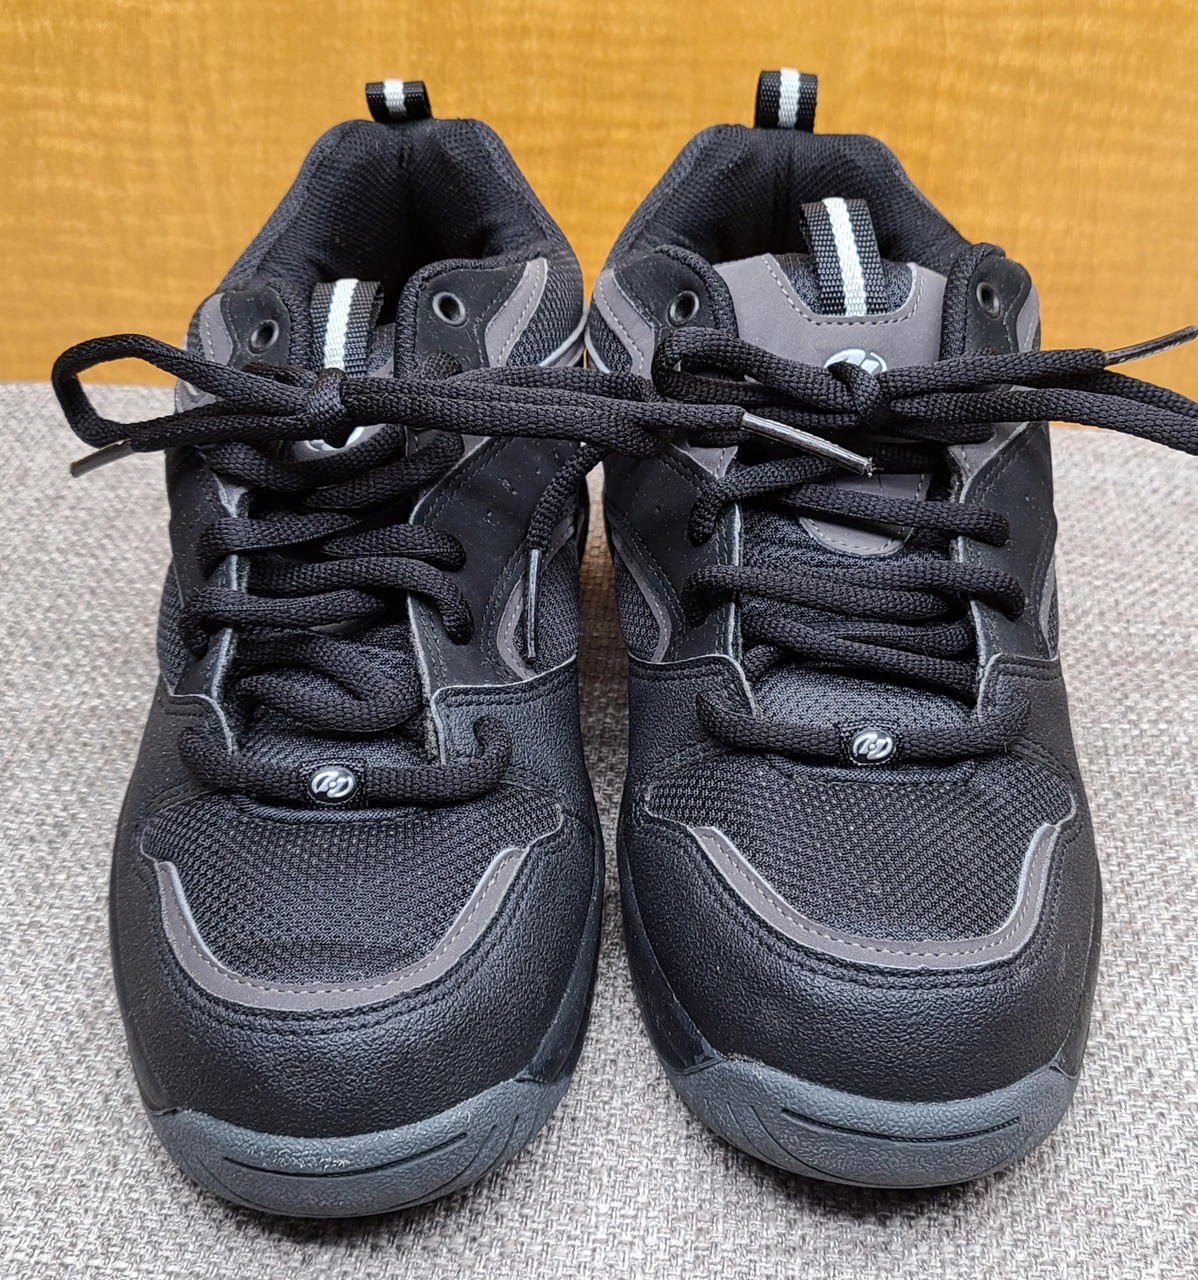 Heelys Streak Black Shoes - Size Mens 9 - style 7170